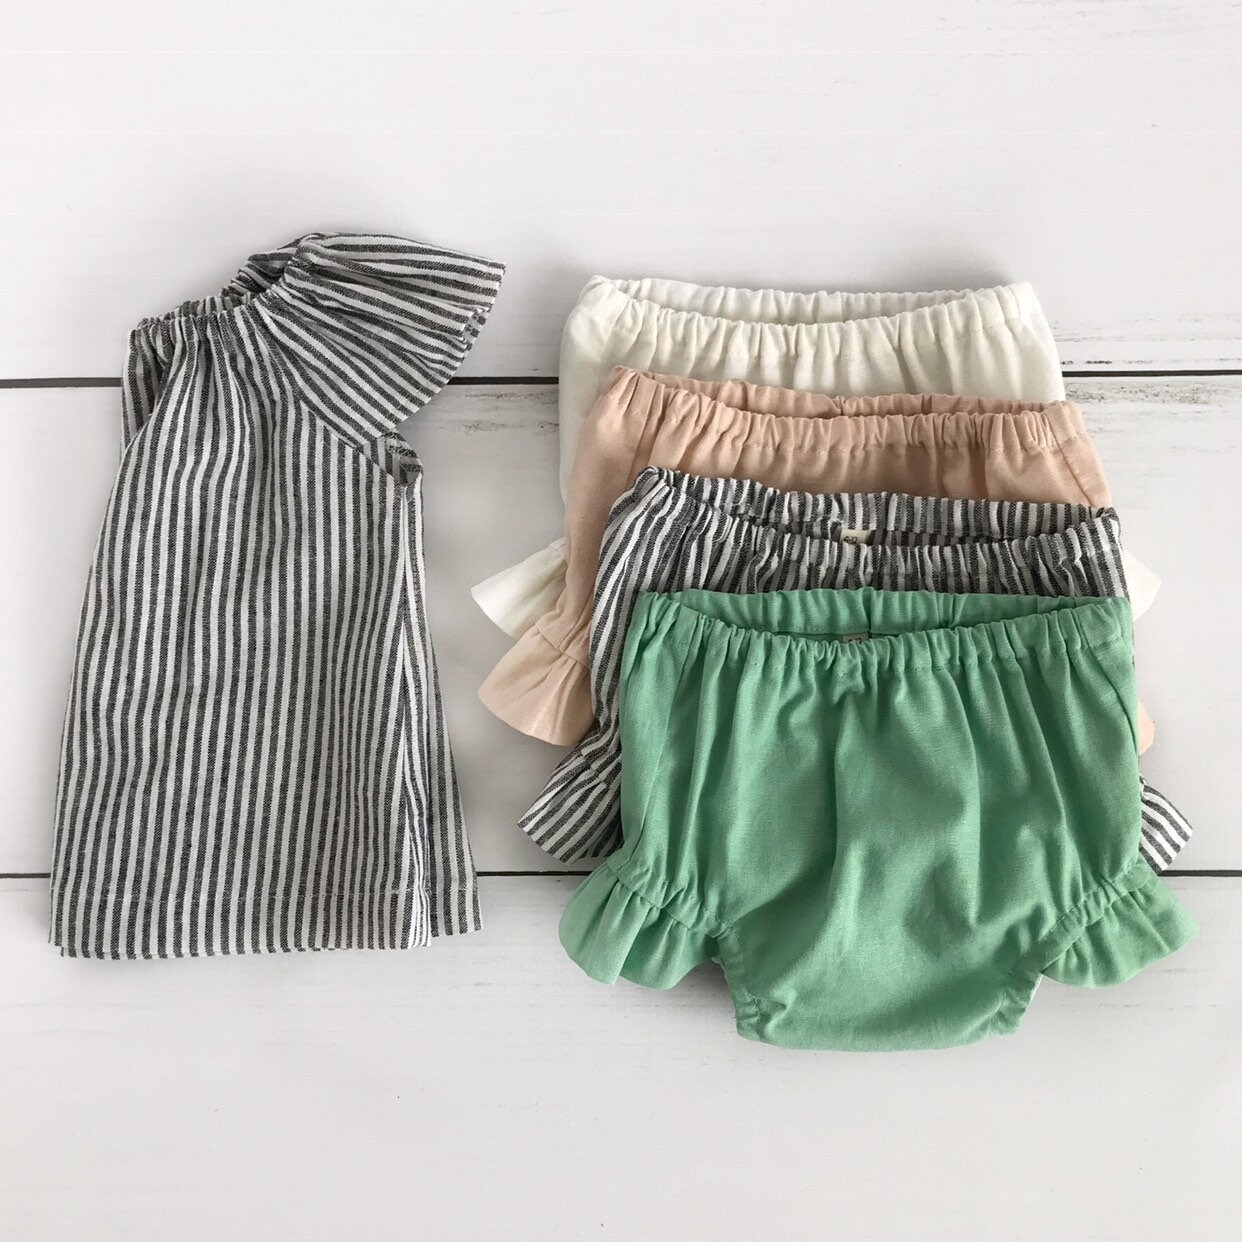 Striped flutter top / baby girl linen clothes / girls linen | Etsy